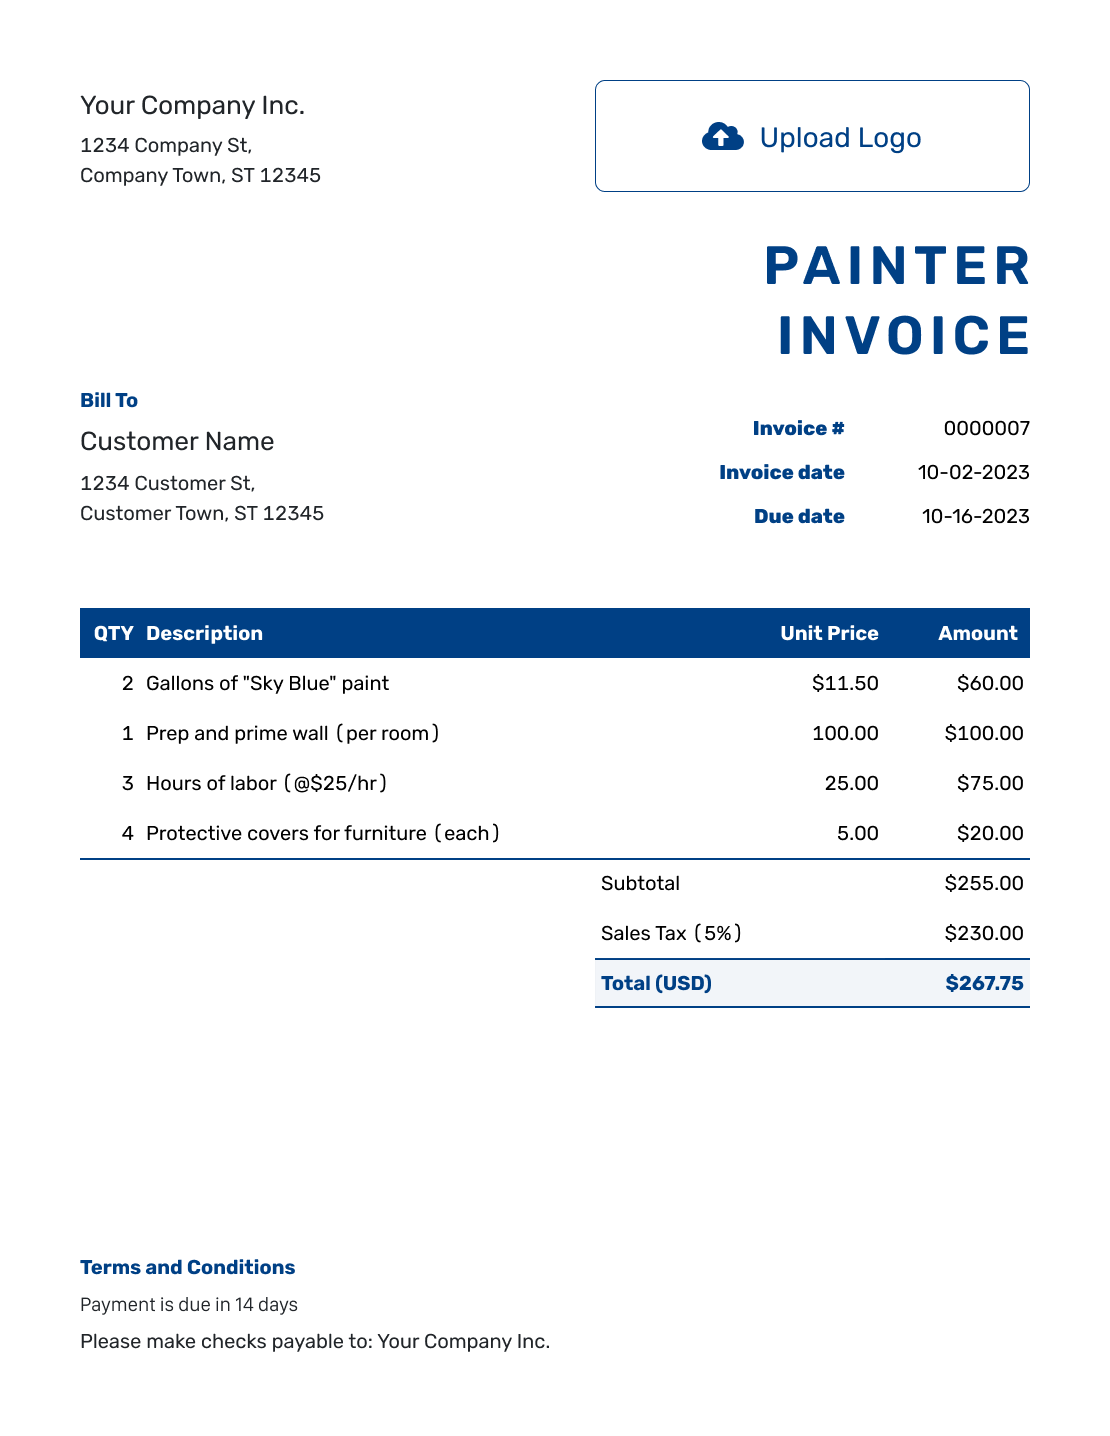 Sample Painter Invoice Template